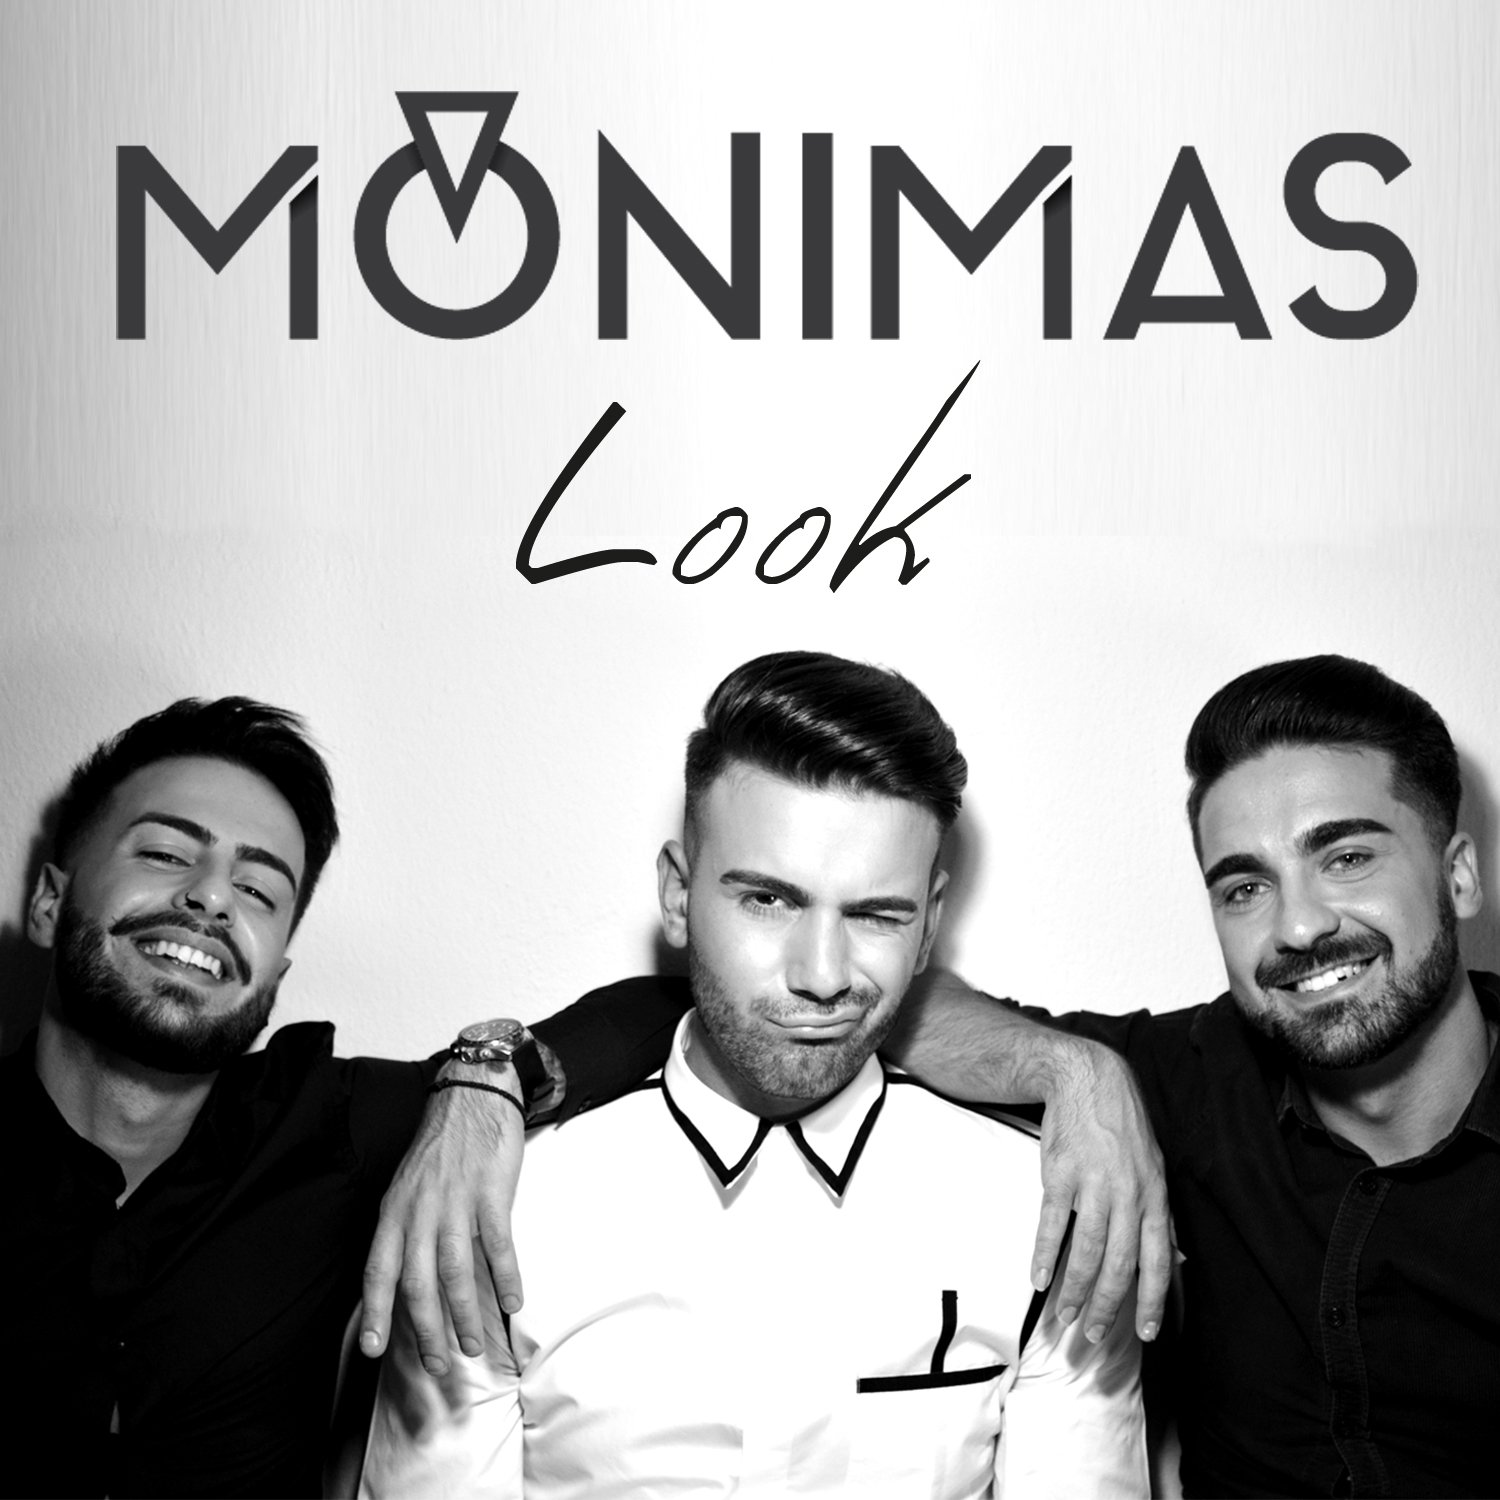 (Video) Ο Βασίλης Καρράς υπογράφει το πρώτο single της νέας μπάντας "Monimas"